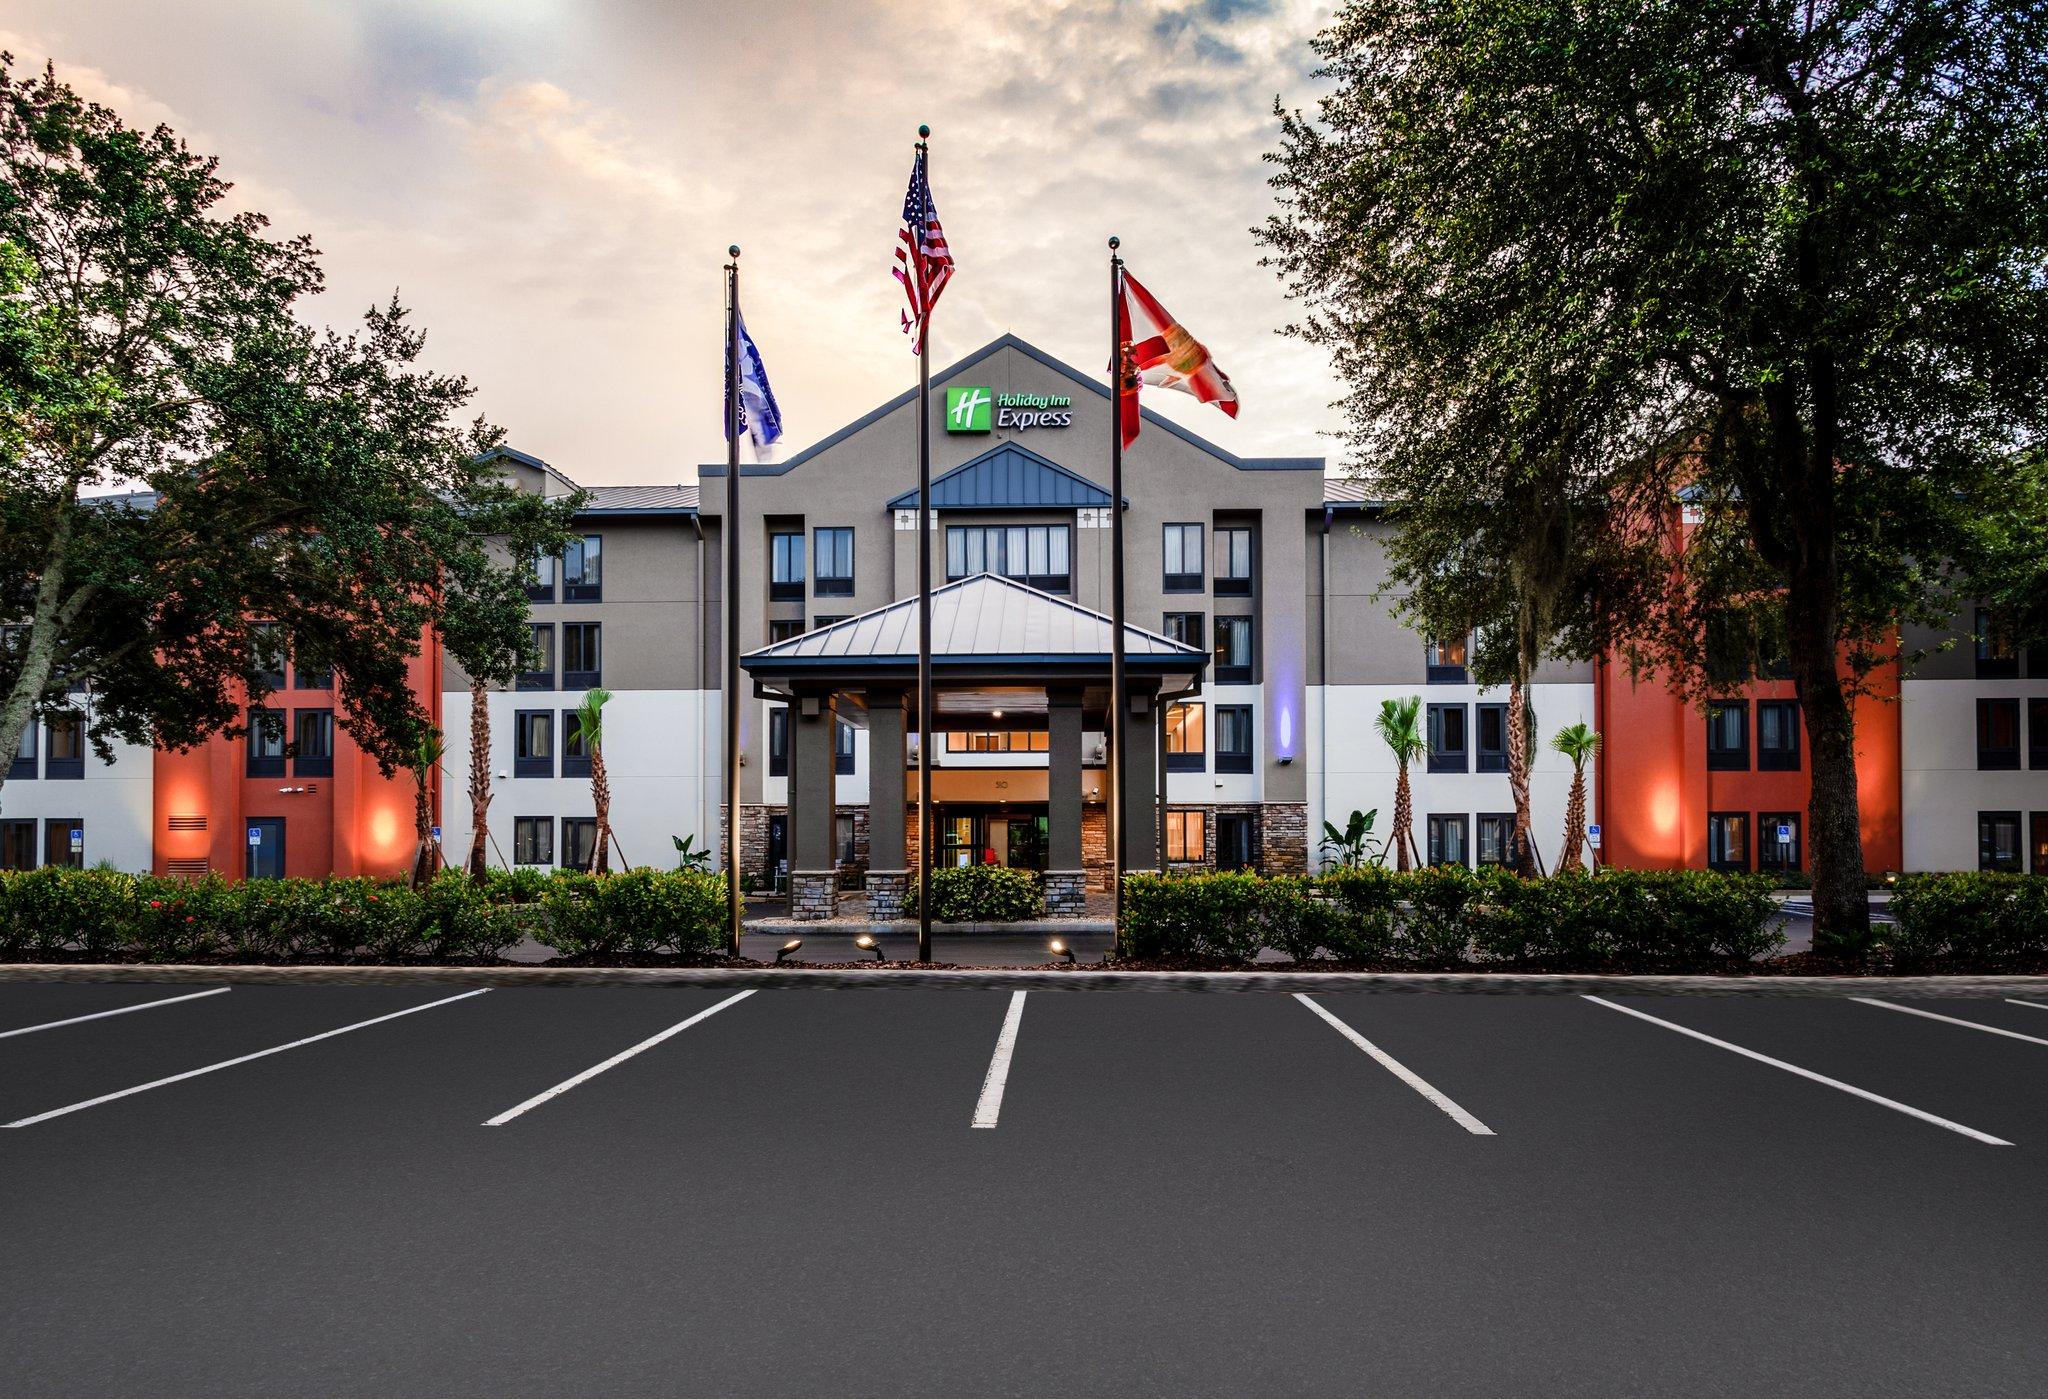 Holiday Inn Express Hotel Tampa Brandon in Brandon, FL